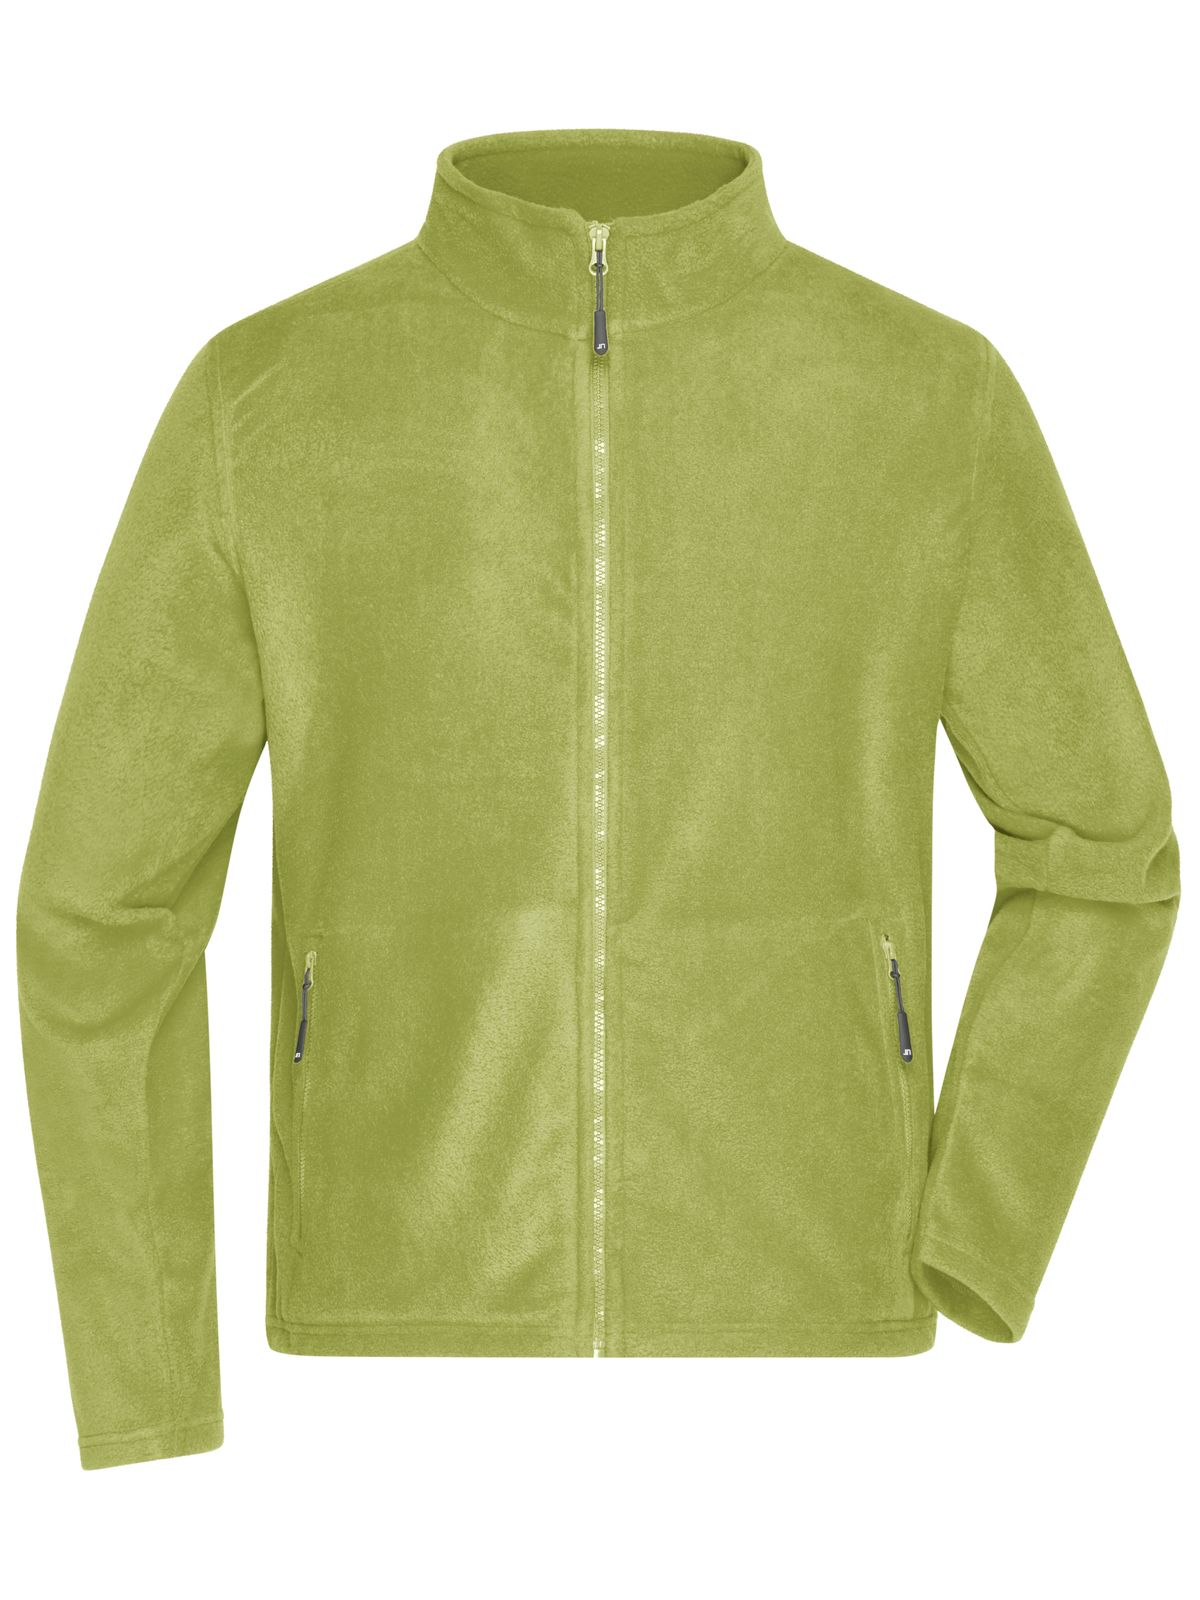 mens-fleece-jacket-lime-green.webp